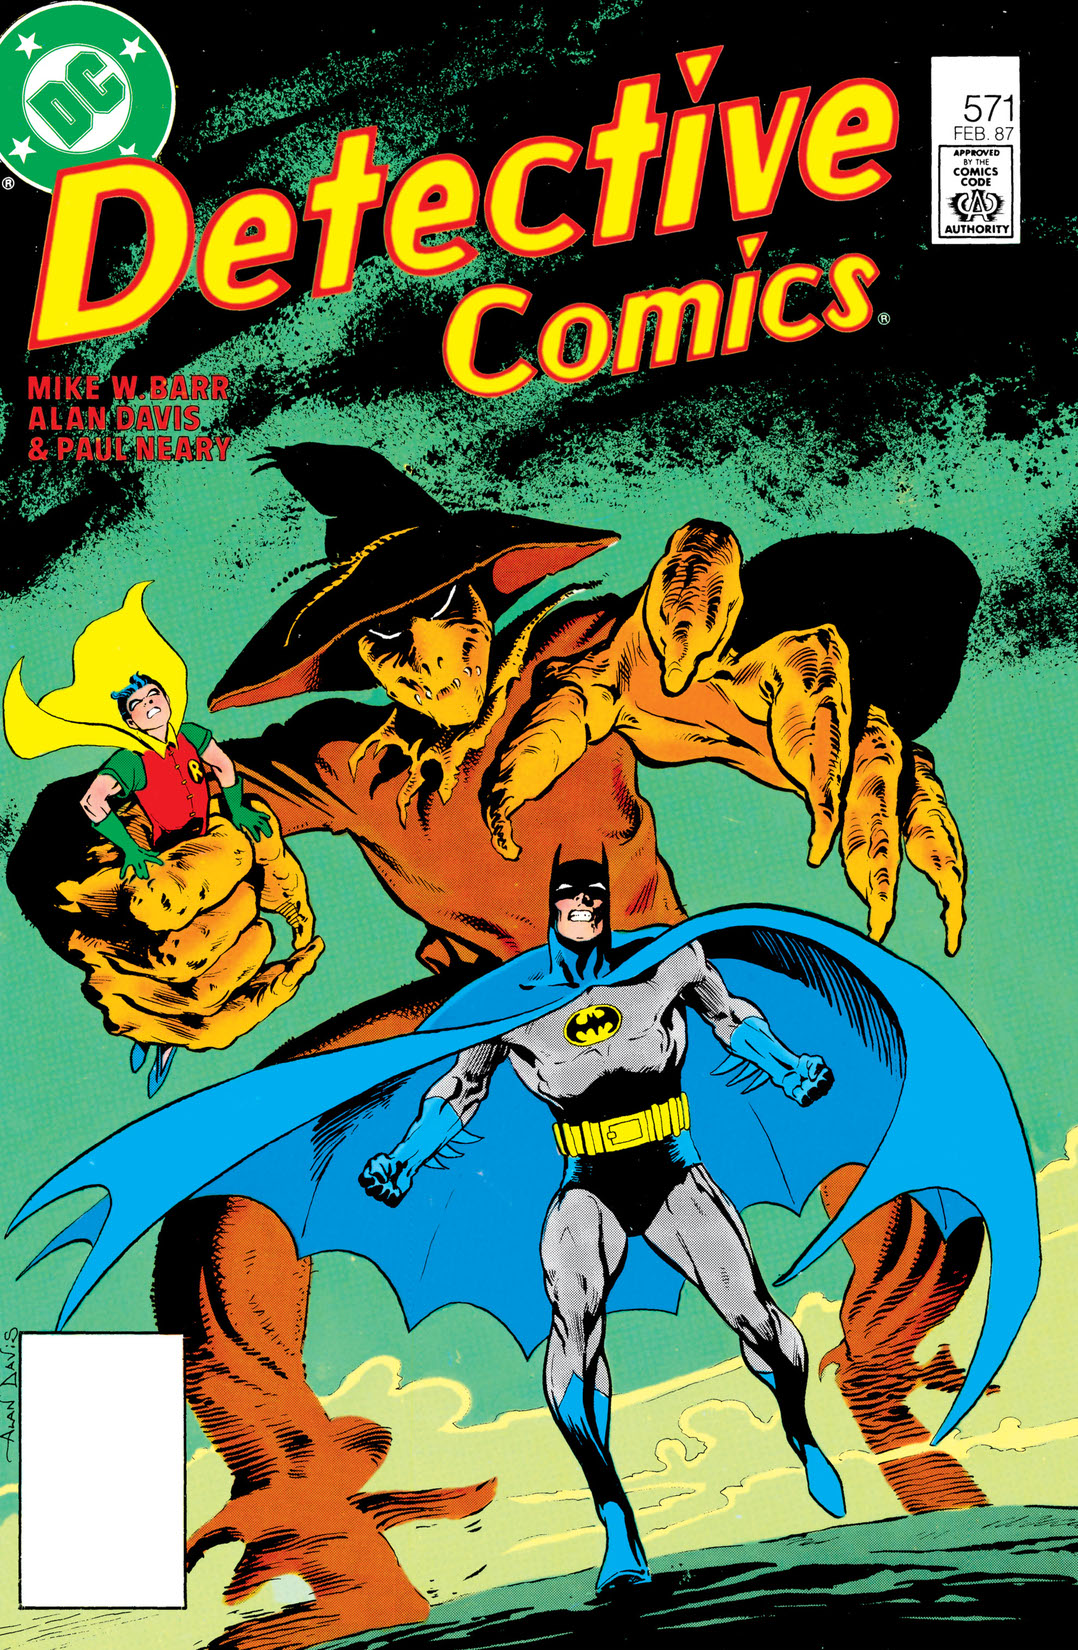 Detective Comics (1937-) #571 preview images